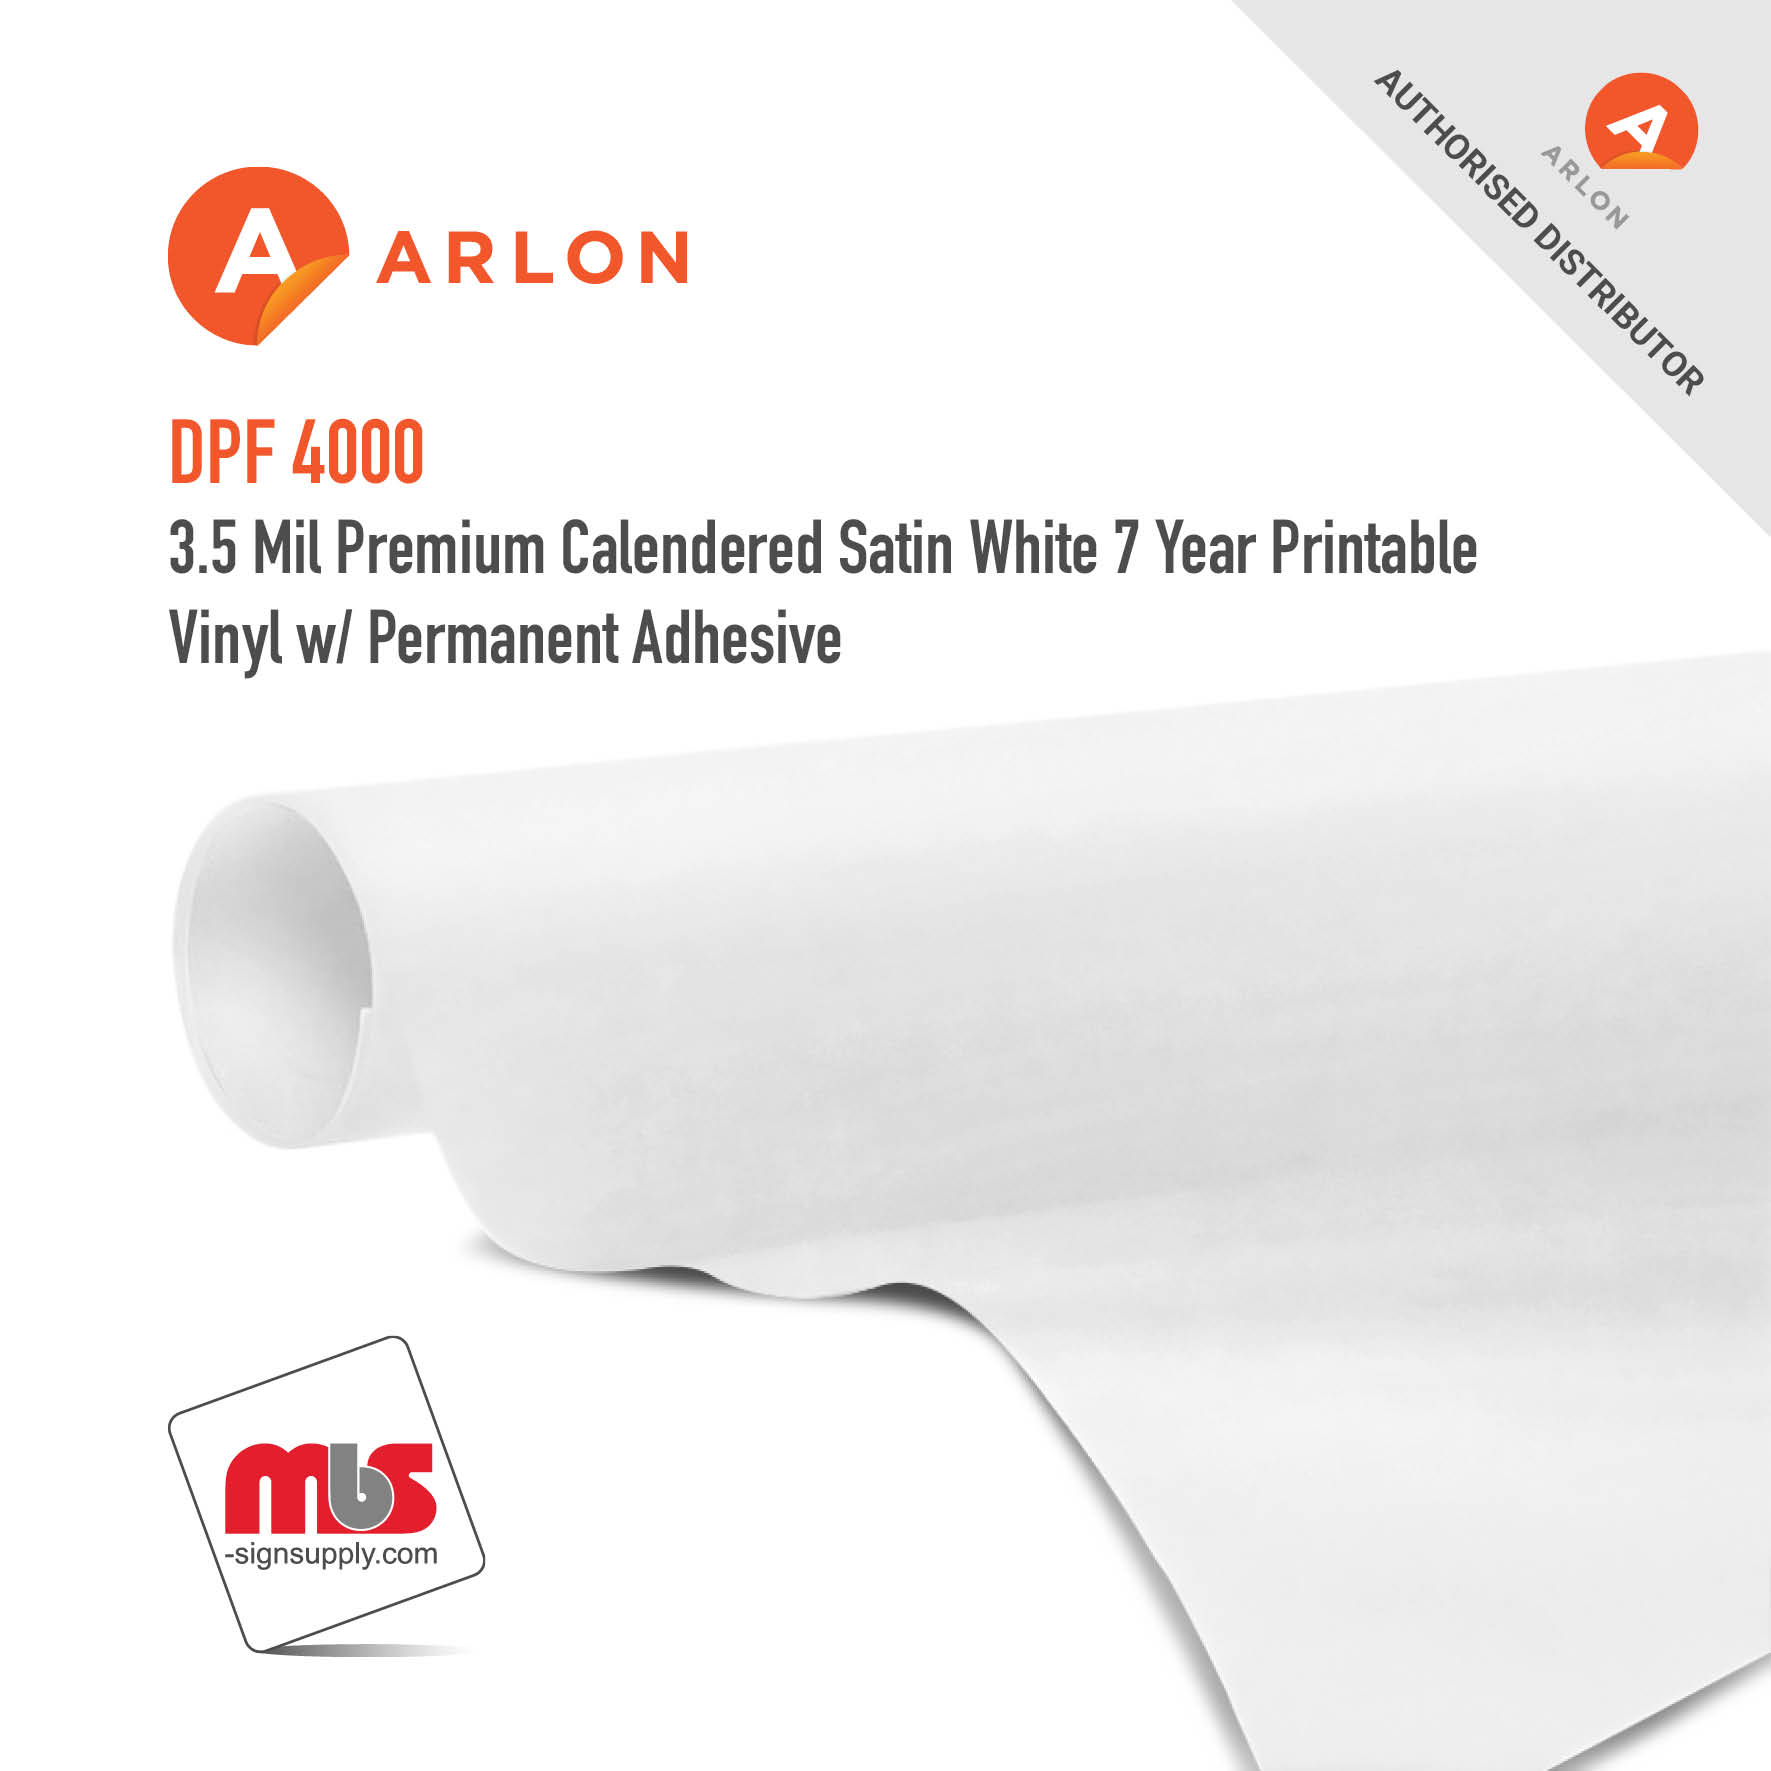 54'' x 50 Yard Roll - Arlon DPF 4000 3.5 Mil Premium Calendered Satin White 7 Year Printable Vinyl w/ Permanent Adhesive